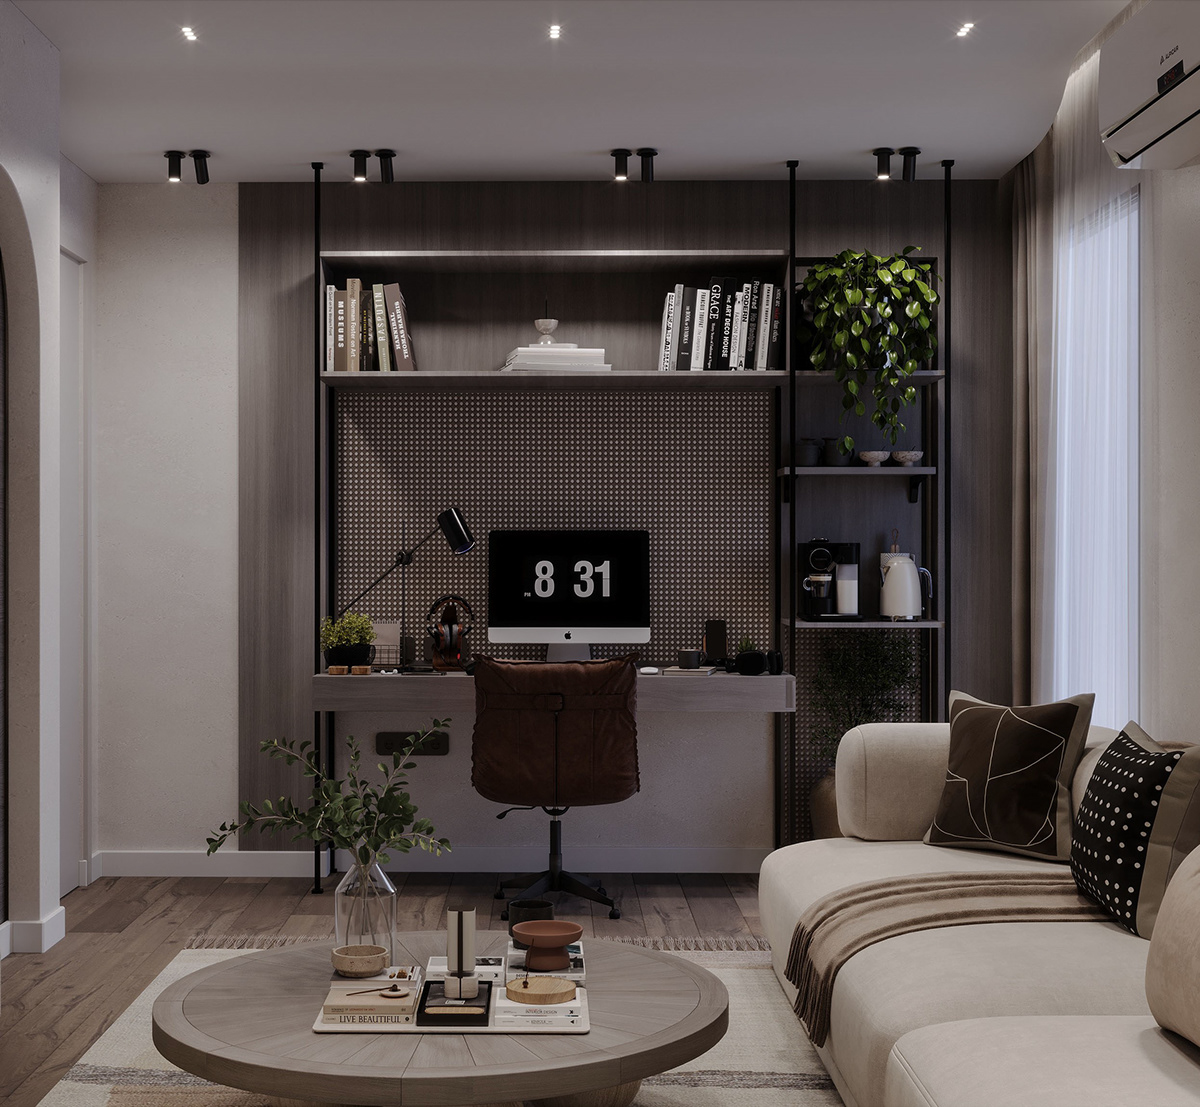 Couch interior design  archviz corona 3ds max CGI living room modern deskdesign coffecorner